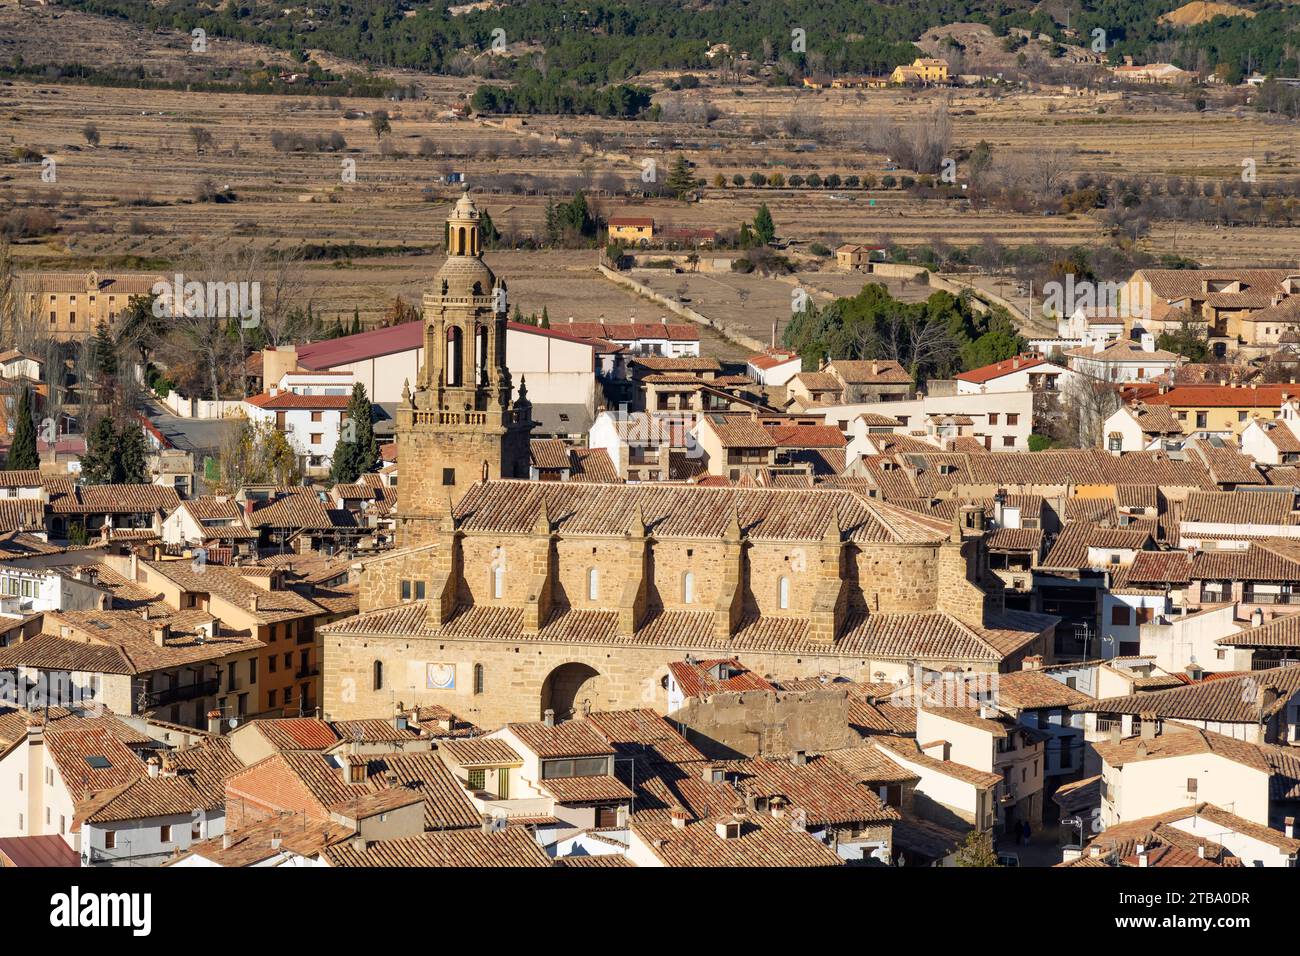 Rubielos de Mora is a landmark small town in Teruel province, Spain. Stock Photo